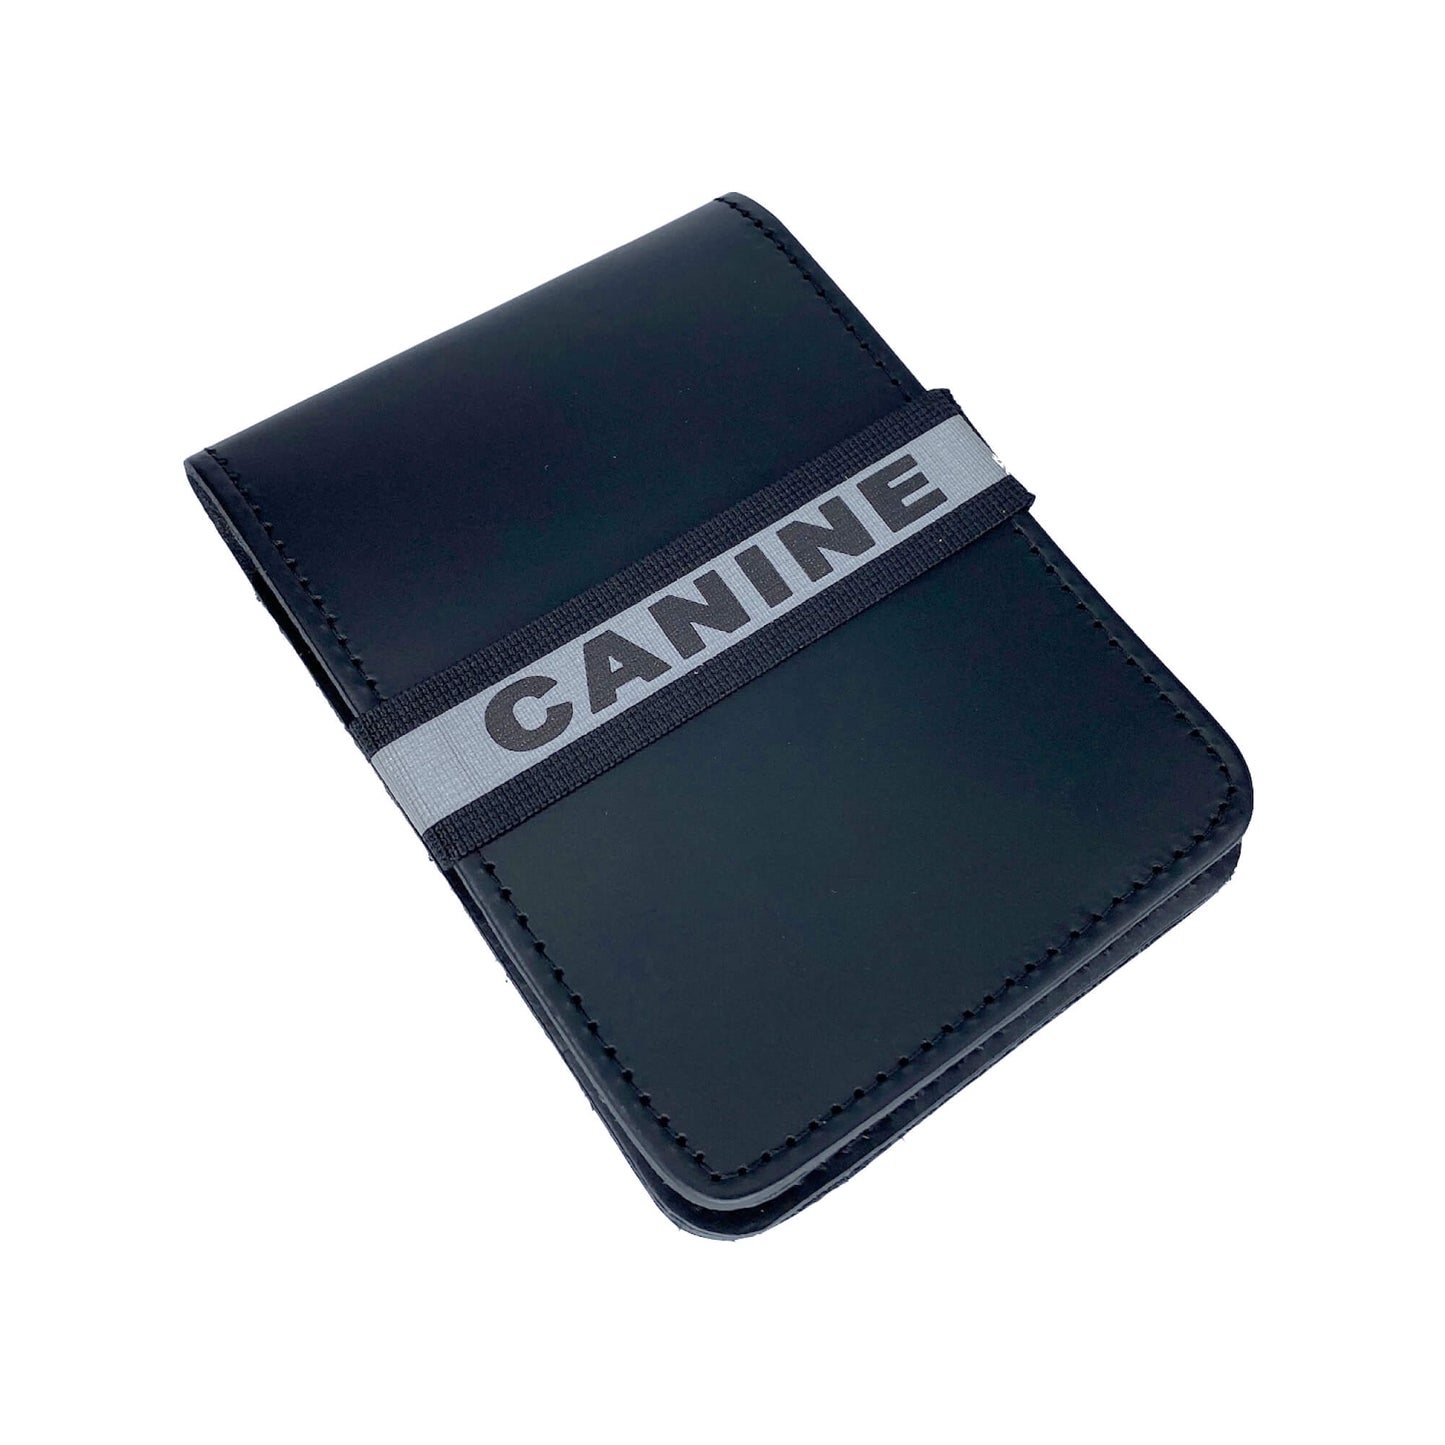 Canine Notebook ID Band-Notebands-911 Duty Gear Canada